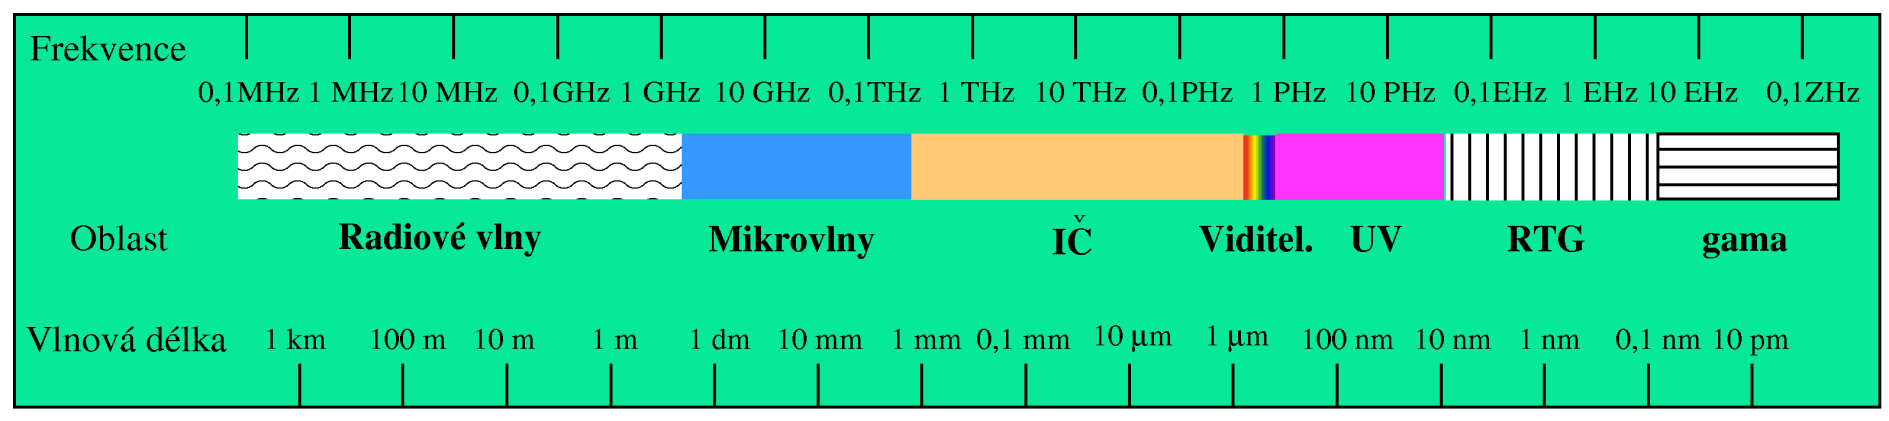 Elektromagnetické spektrum http://cs.wikipedia.